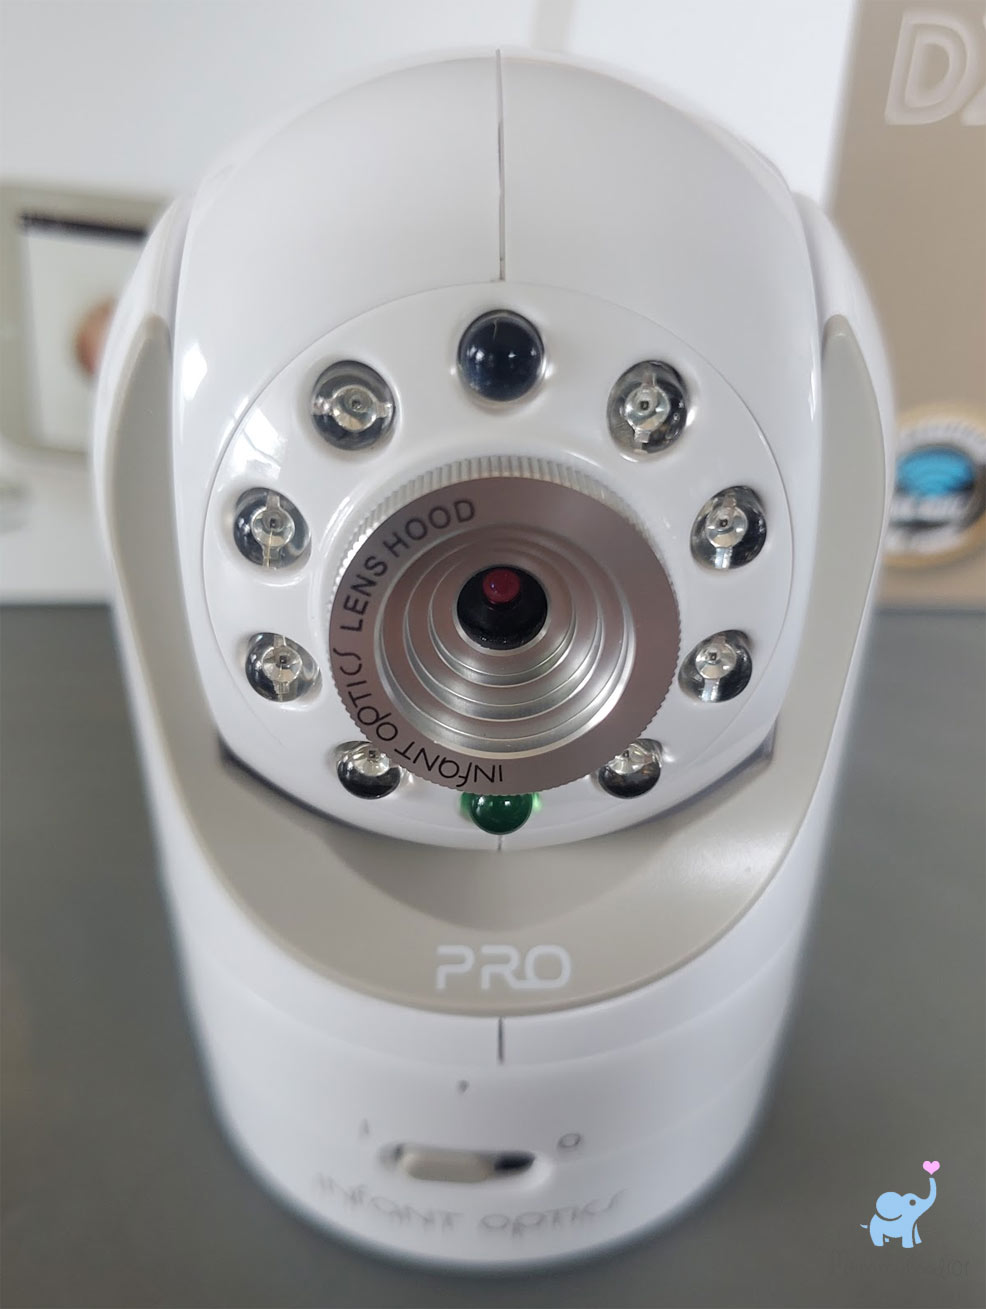 the camera of the infant optics dxr-8 pro